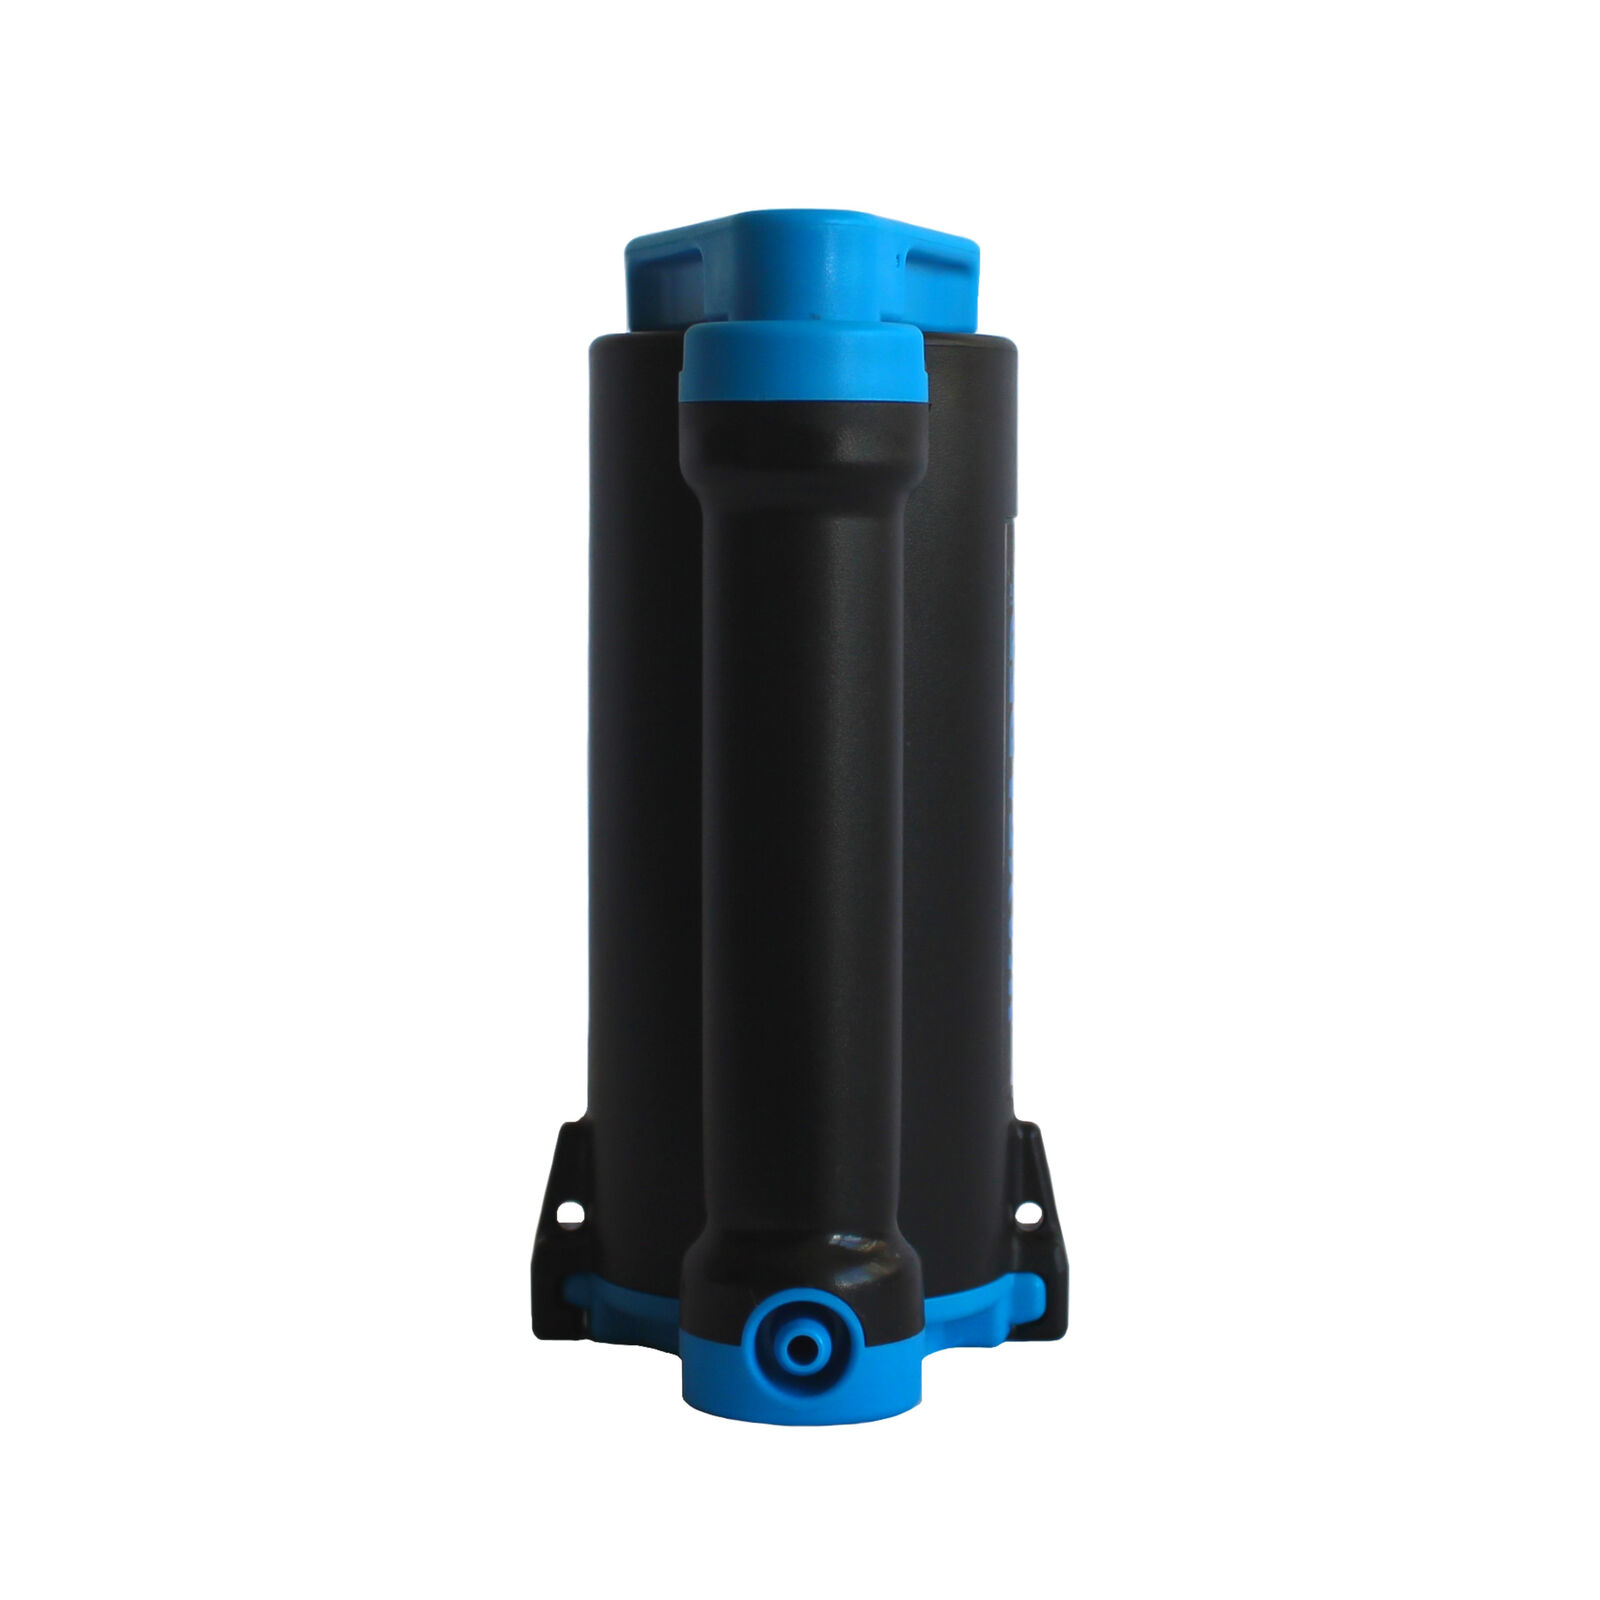 Lifesaver Wayfarer water purifier portable